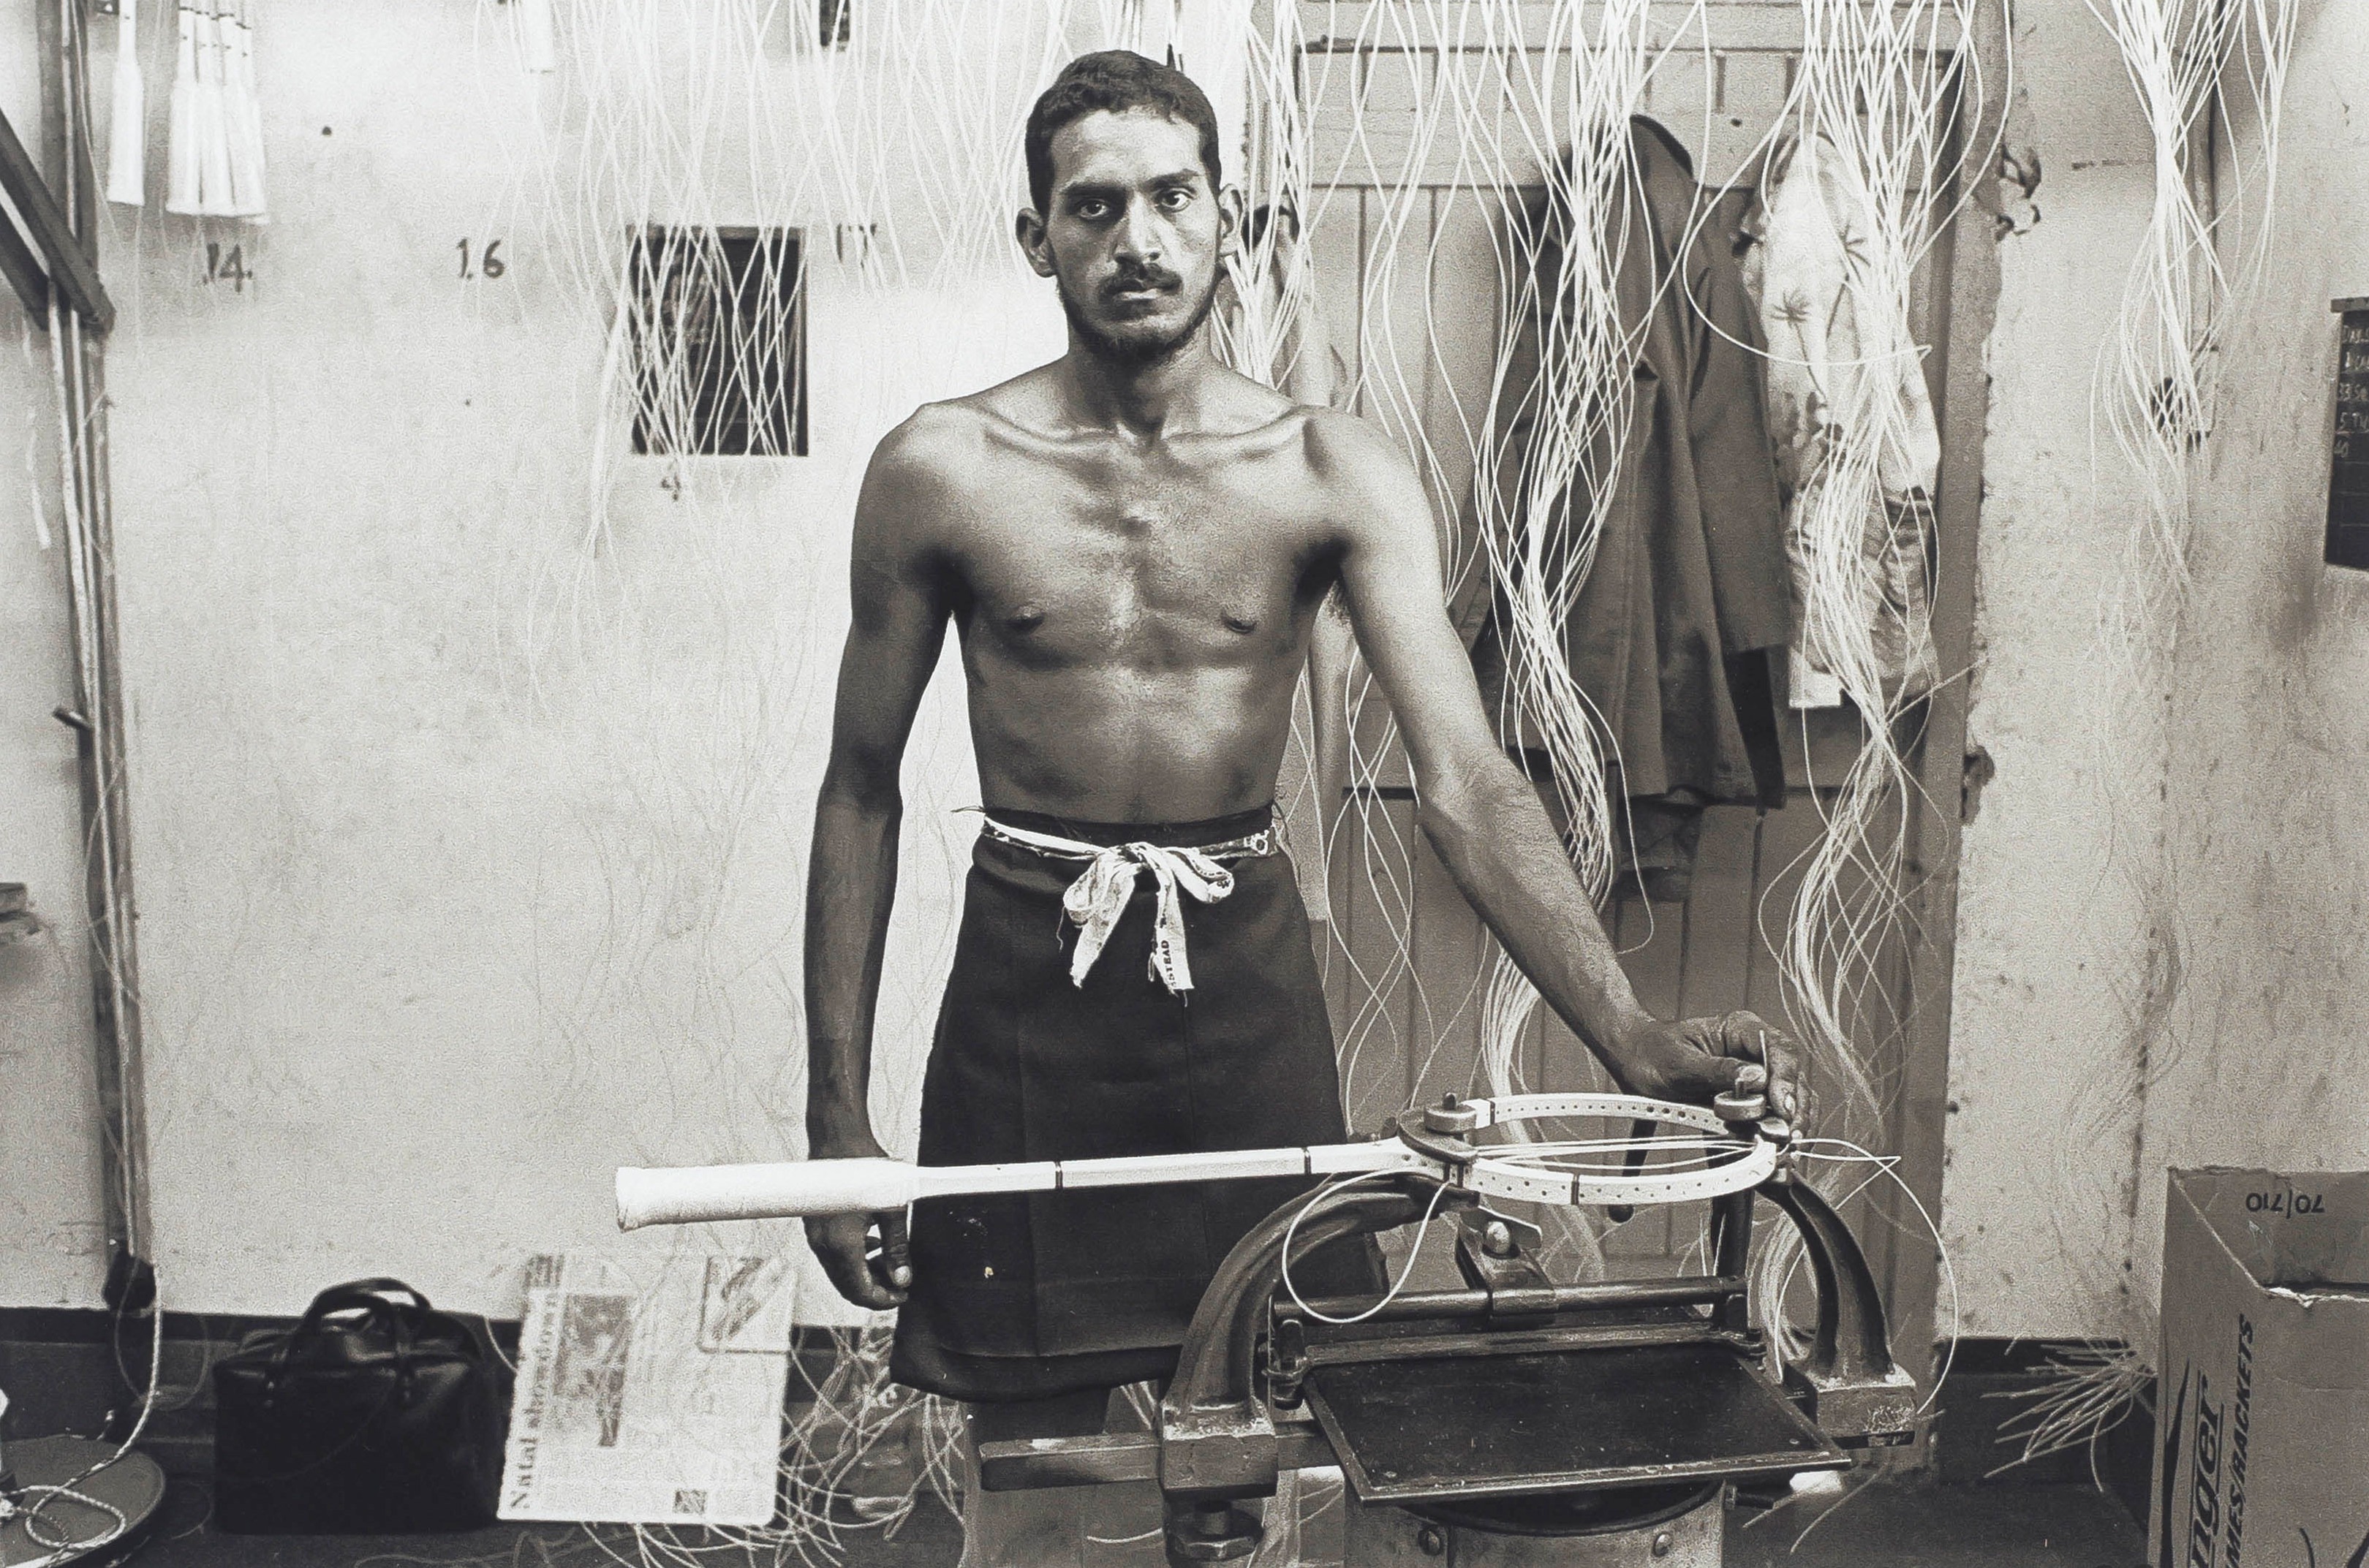 Omar Badsha; Disabled Worker. Lorne Street, 1981